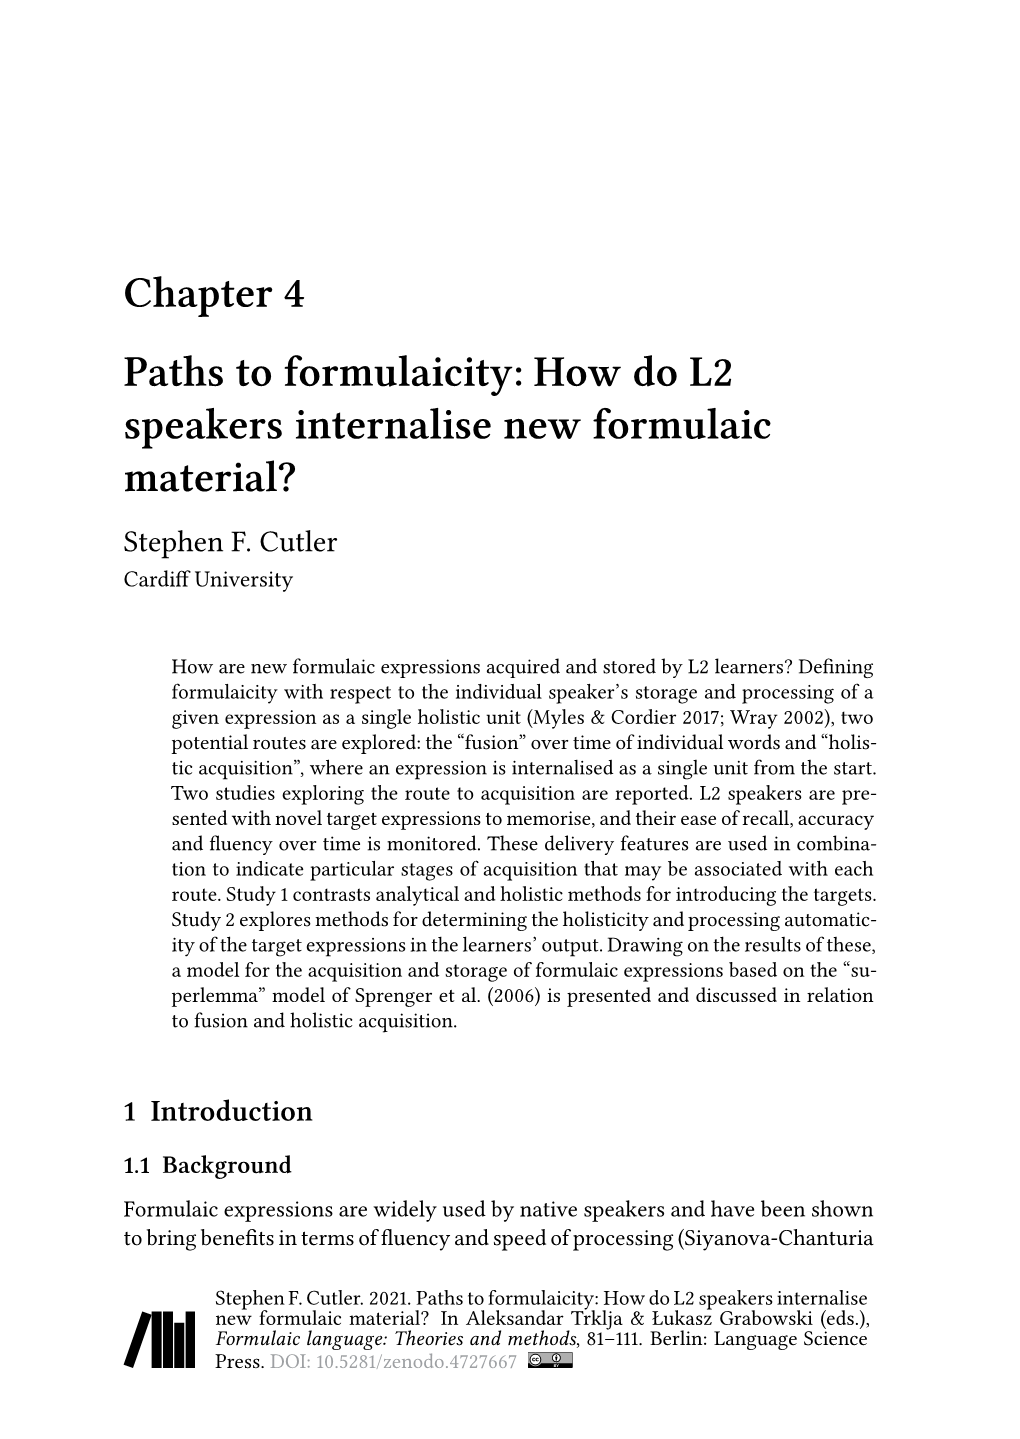 How Do L2 Speakers Internalise New Formulaic Material? Stephen F